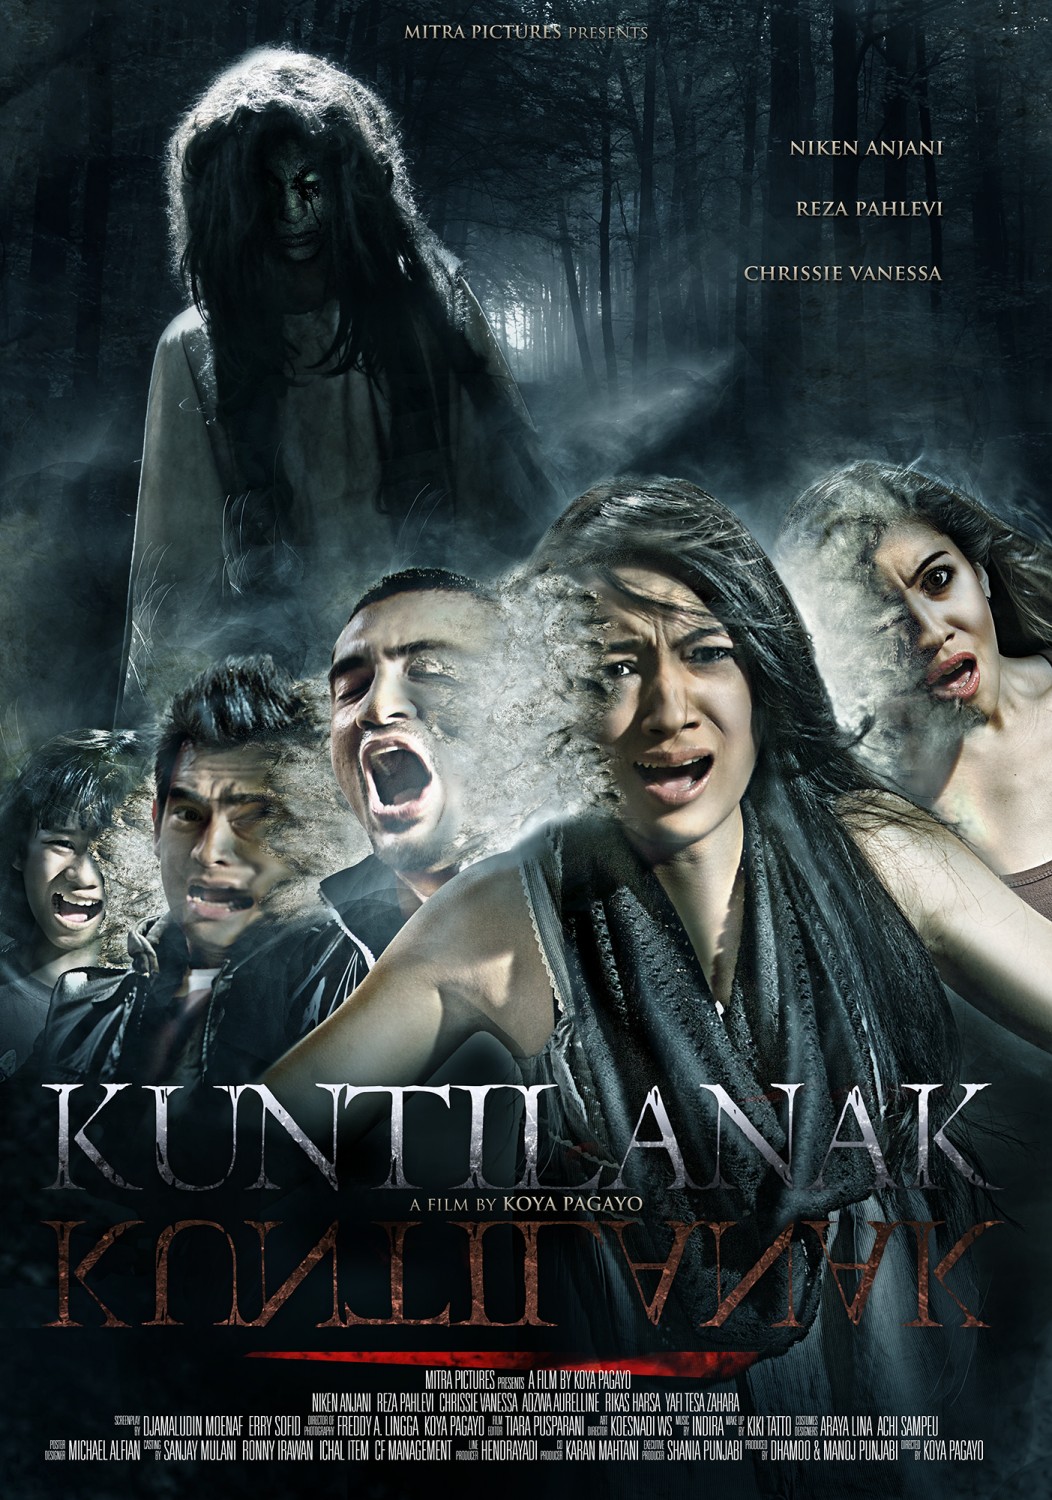 Extra Large Movie Poster Image for Kuntilanak-kuntilanak 